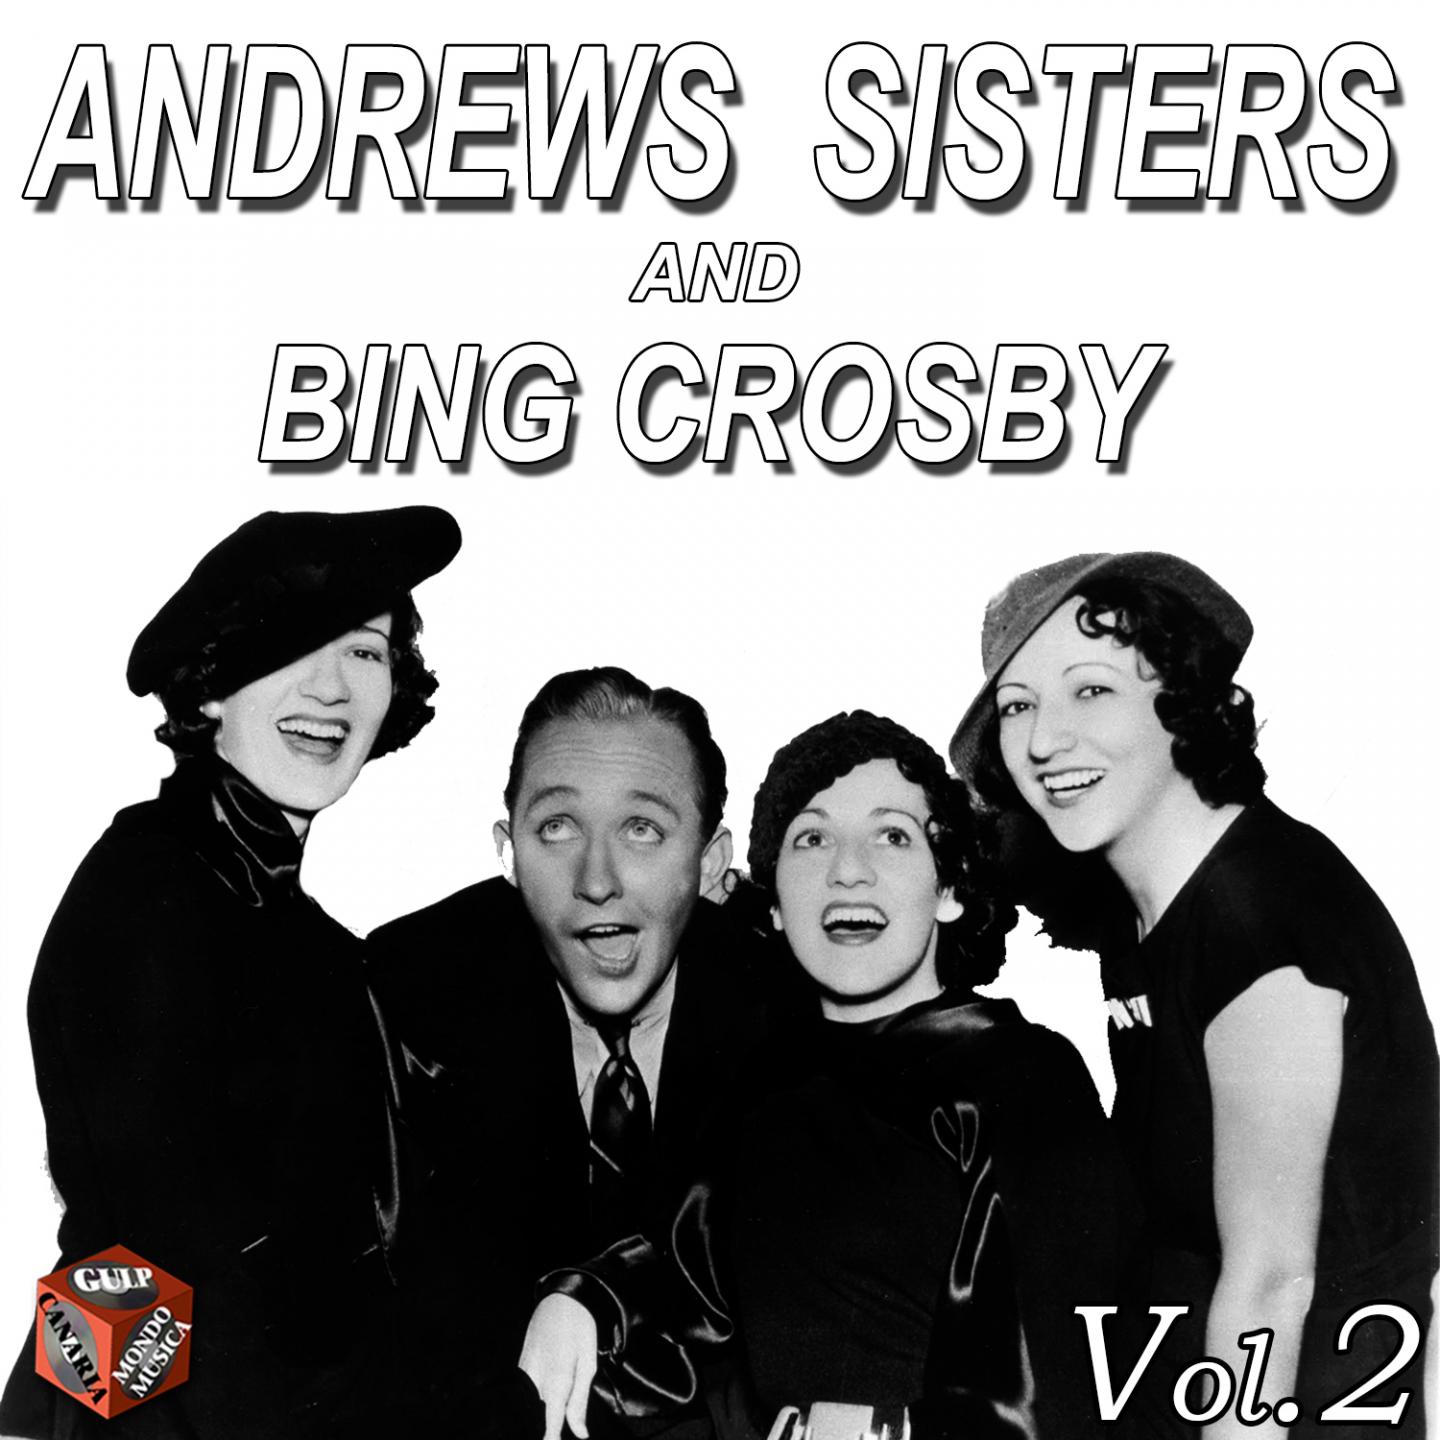 Andrews Sisters and Bing Crosby, Vol. 2